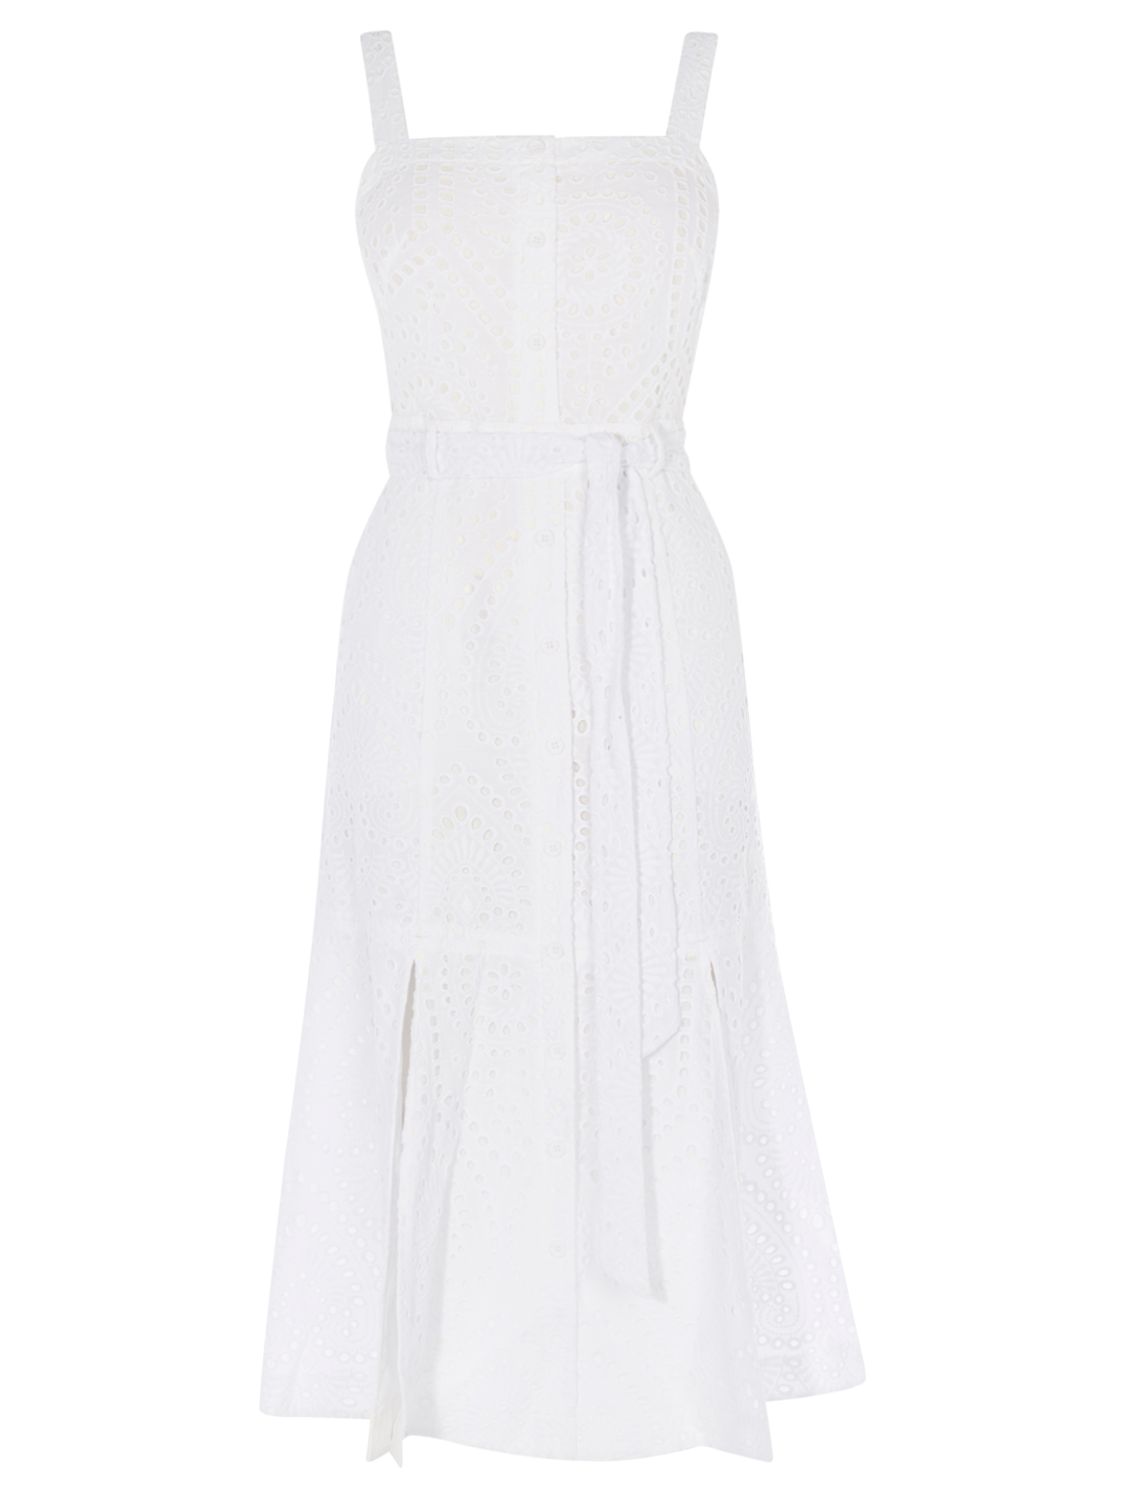 Karen Millen Broderie Midi Dress, White